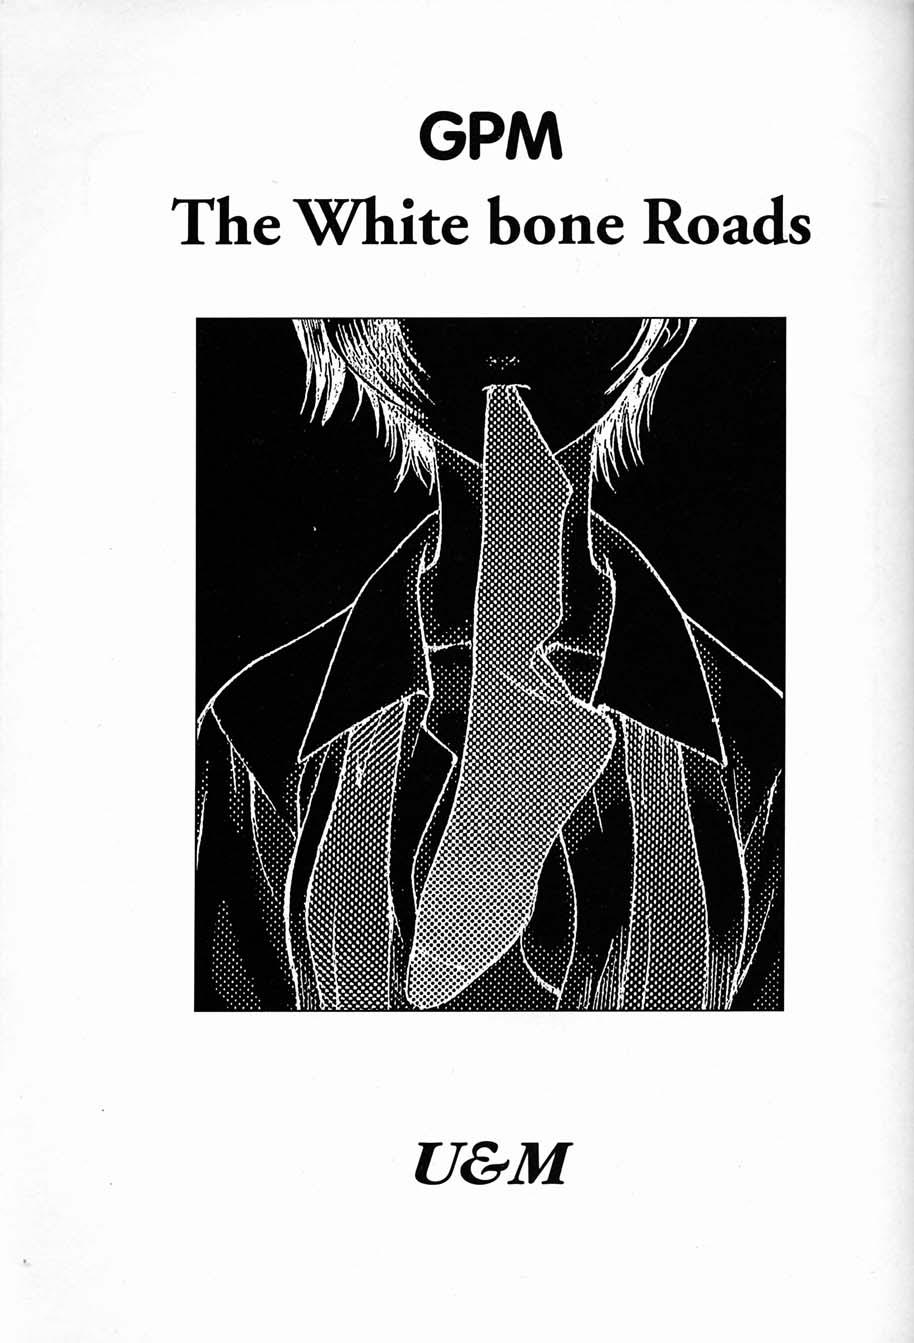 Pay The White bone Roads - Gunparade march Ball Sucking - Page 5